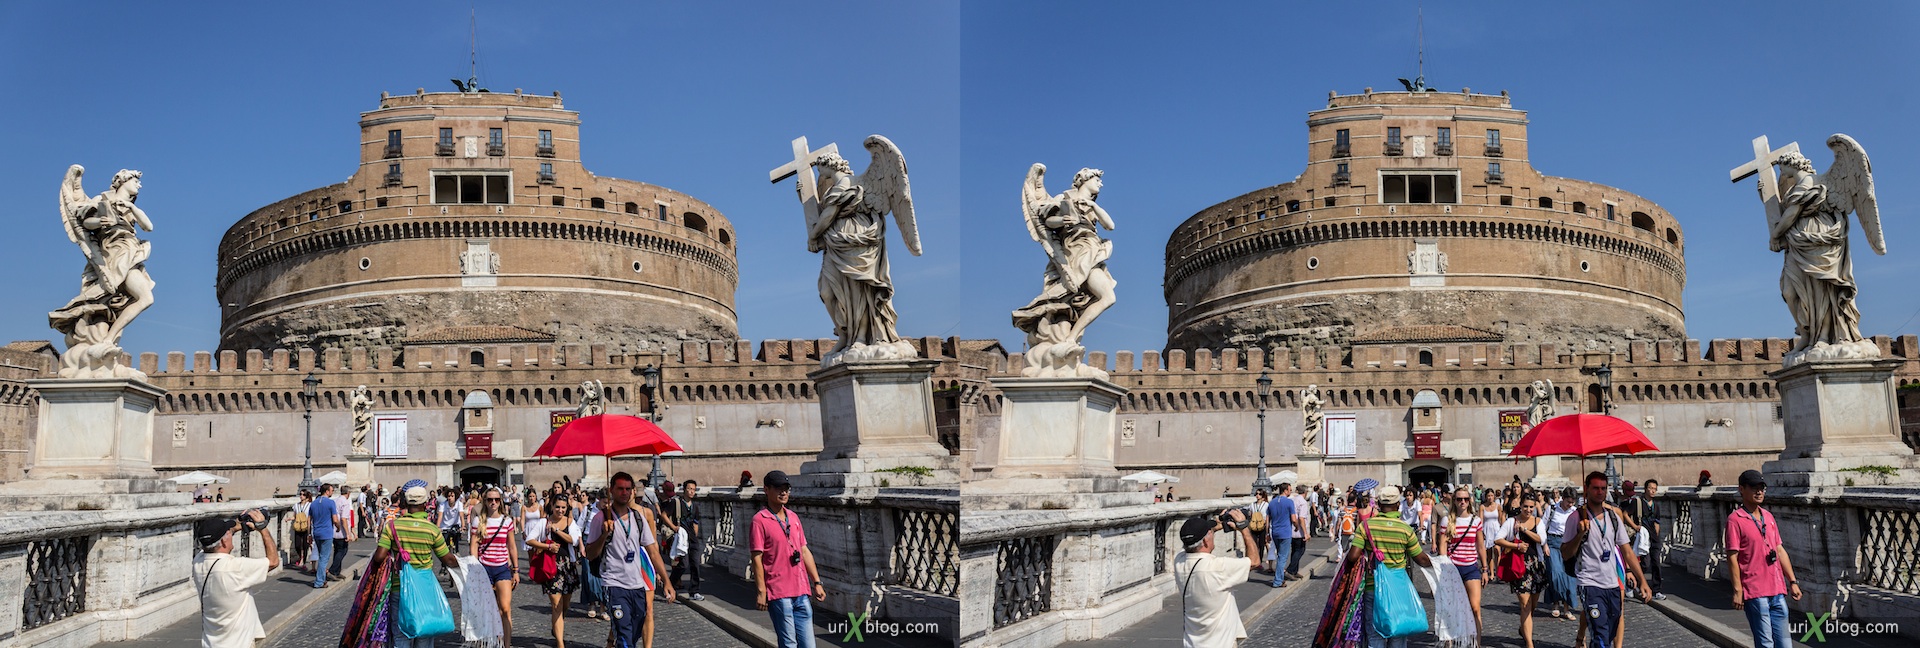 2012, Castel Sant Angelo, Mausoleum of Hadrian, bridge, 3D, stereo pair, cross-eyed, crossview, cross view stereo pair